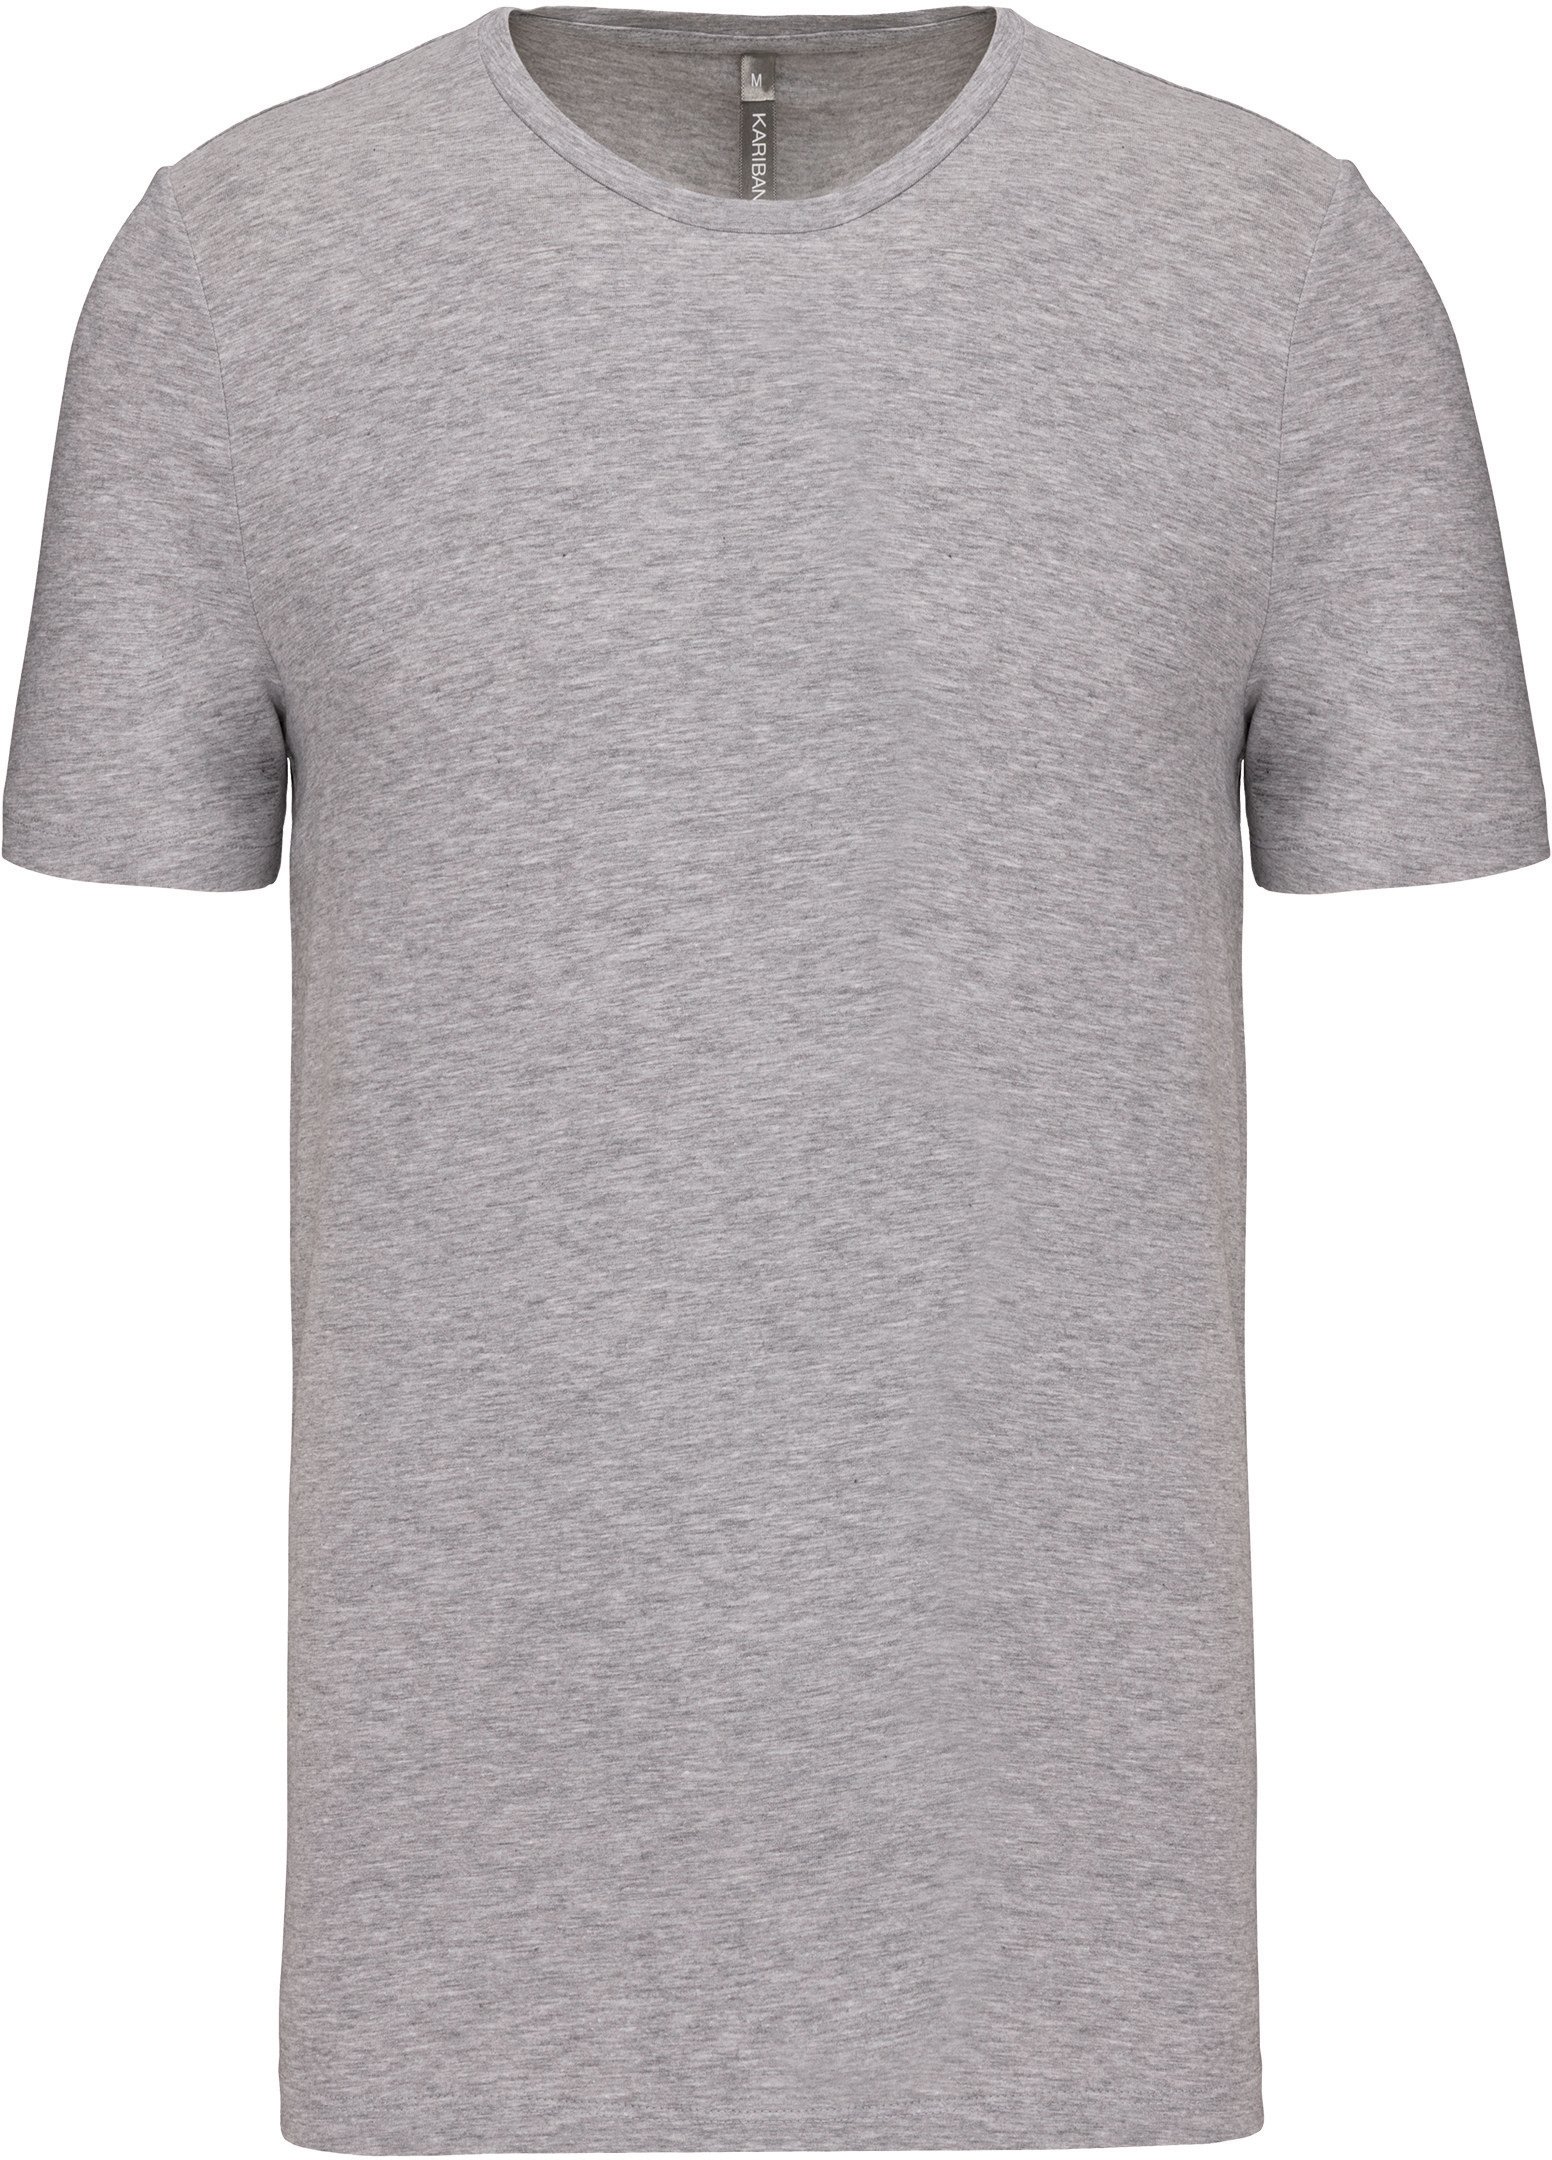 Pánské elastické tričko Barva: Light Grey Heather, Velikost: S